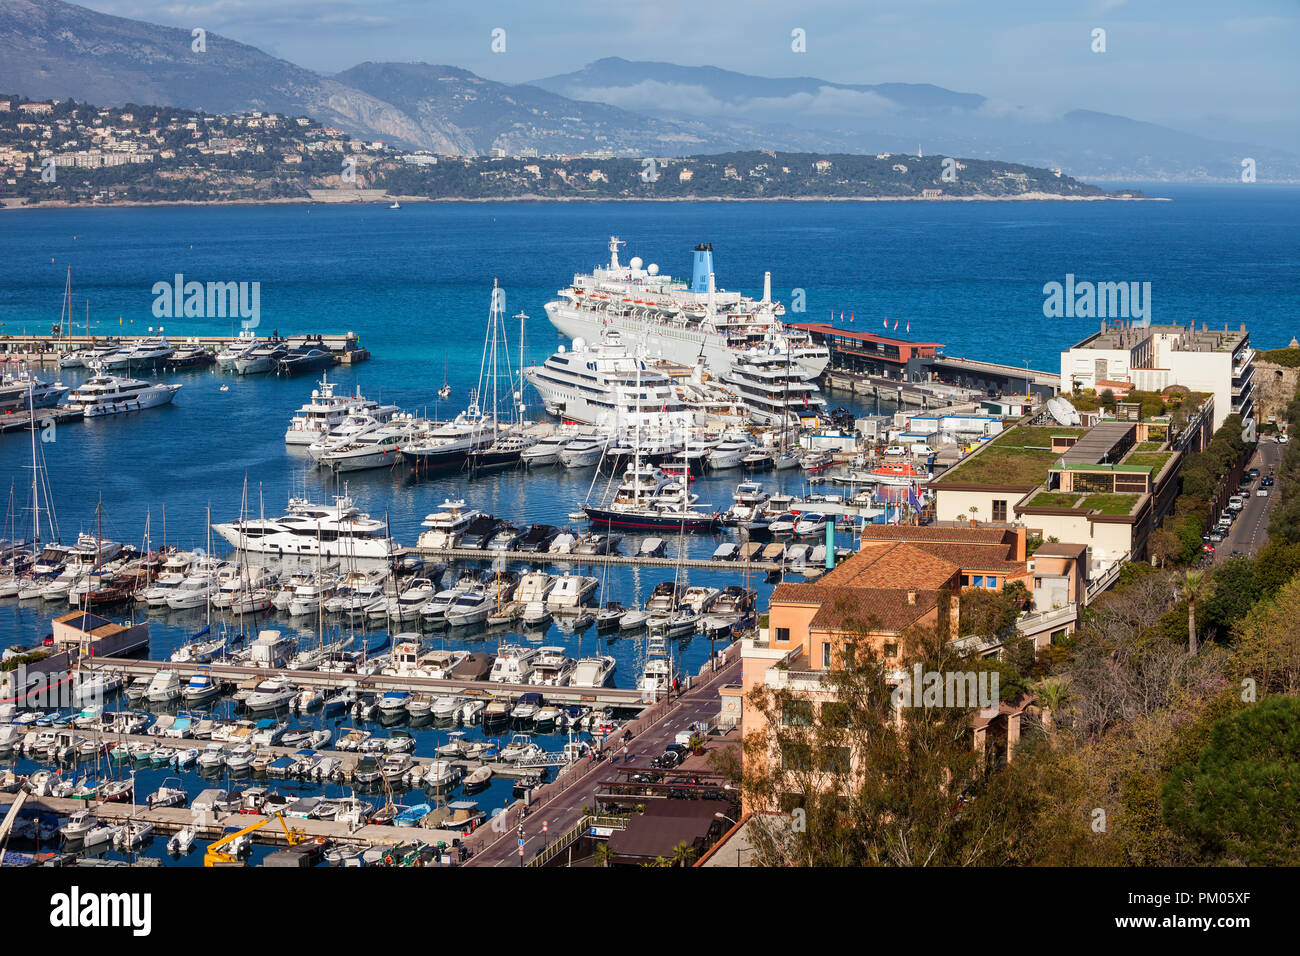 Monaco principality, yachts and boats at Port Hercule on Mediterranean Sea Stock Photo